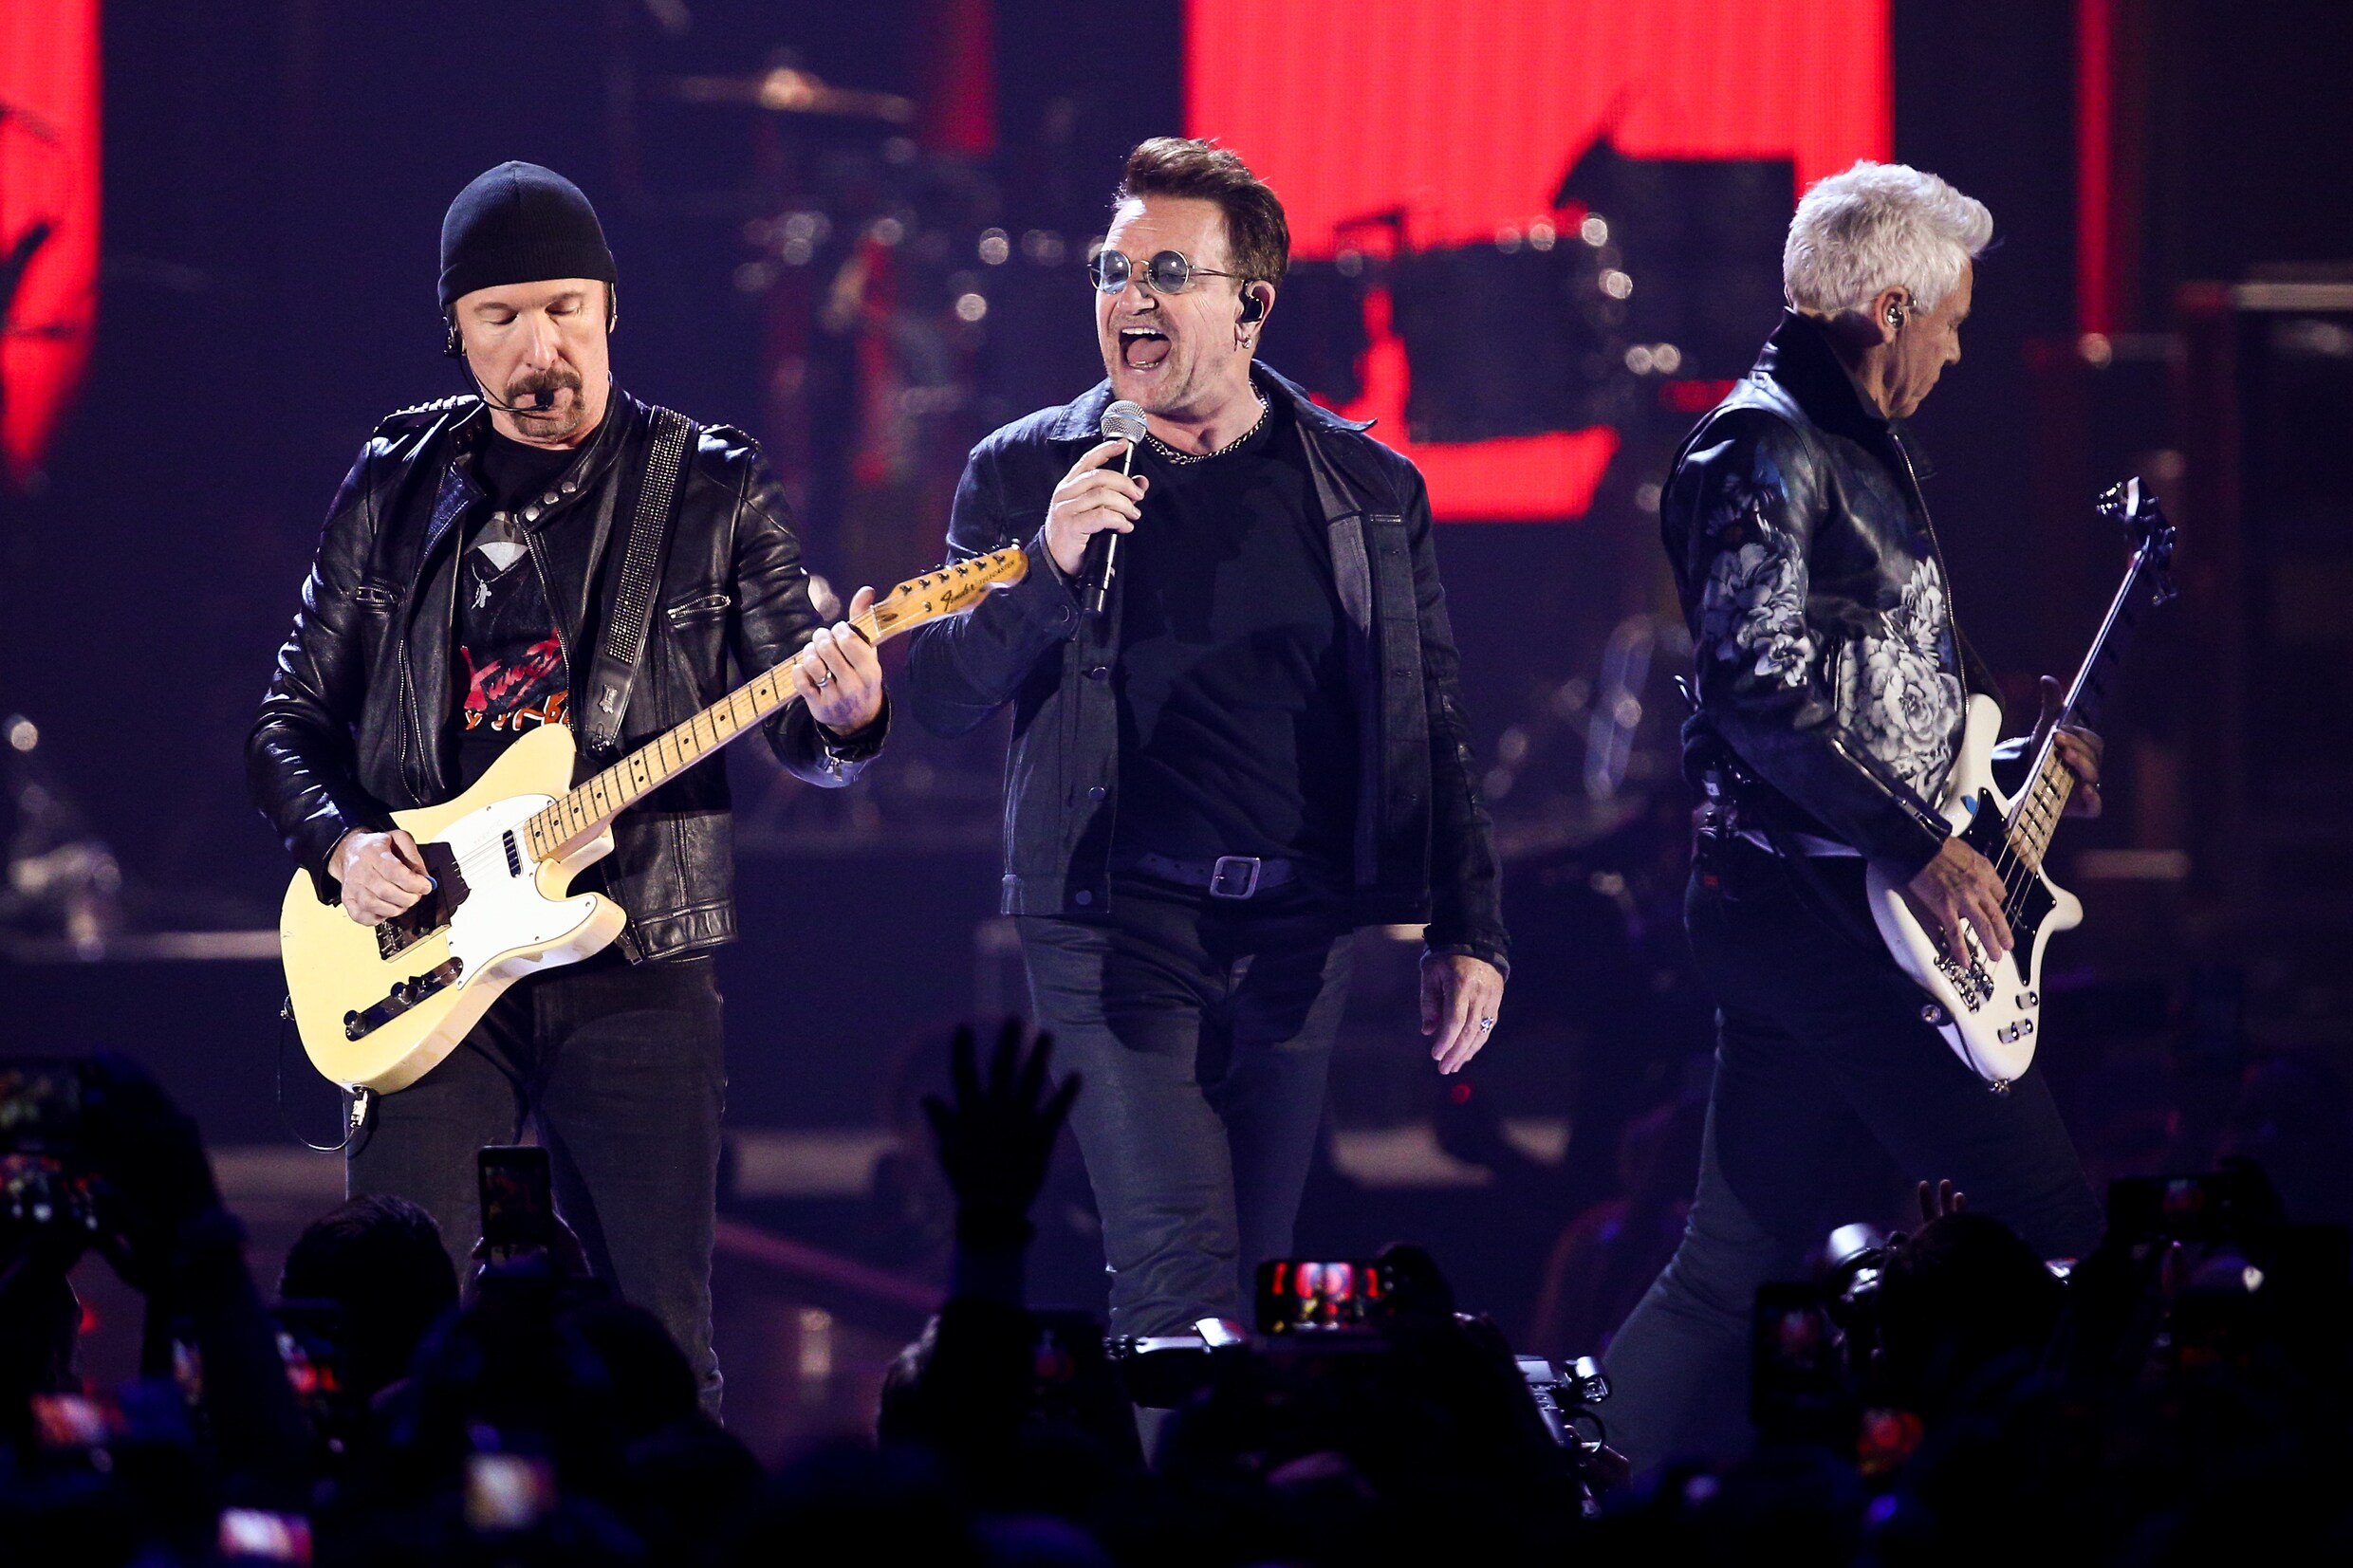 Cultuurblog - U2 stelt nieuw album uit om verkiezing Trump